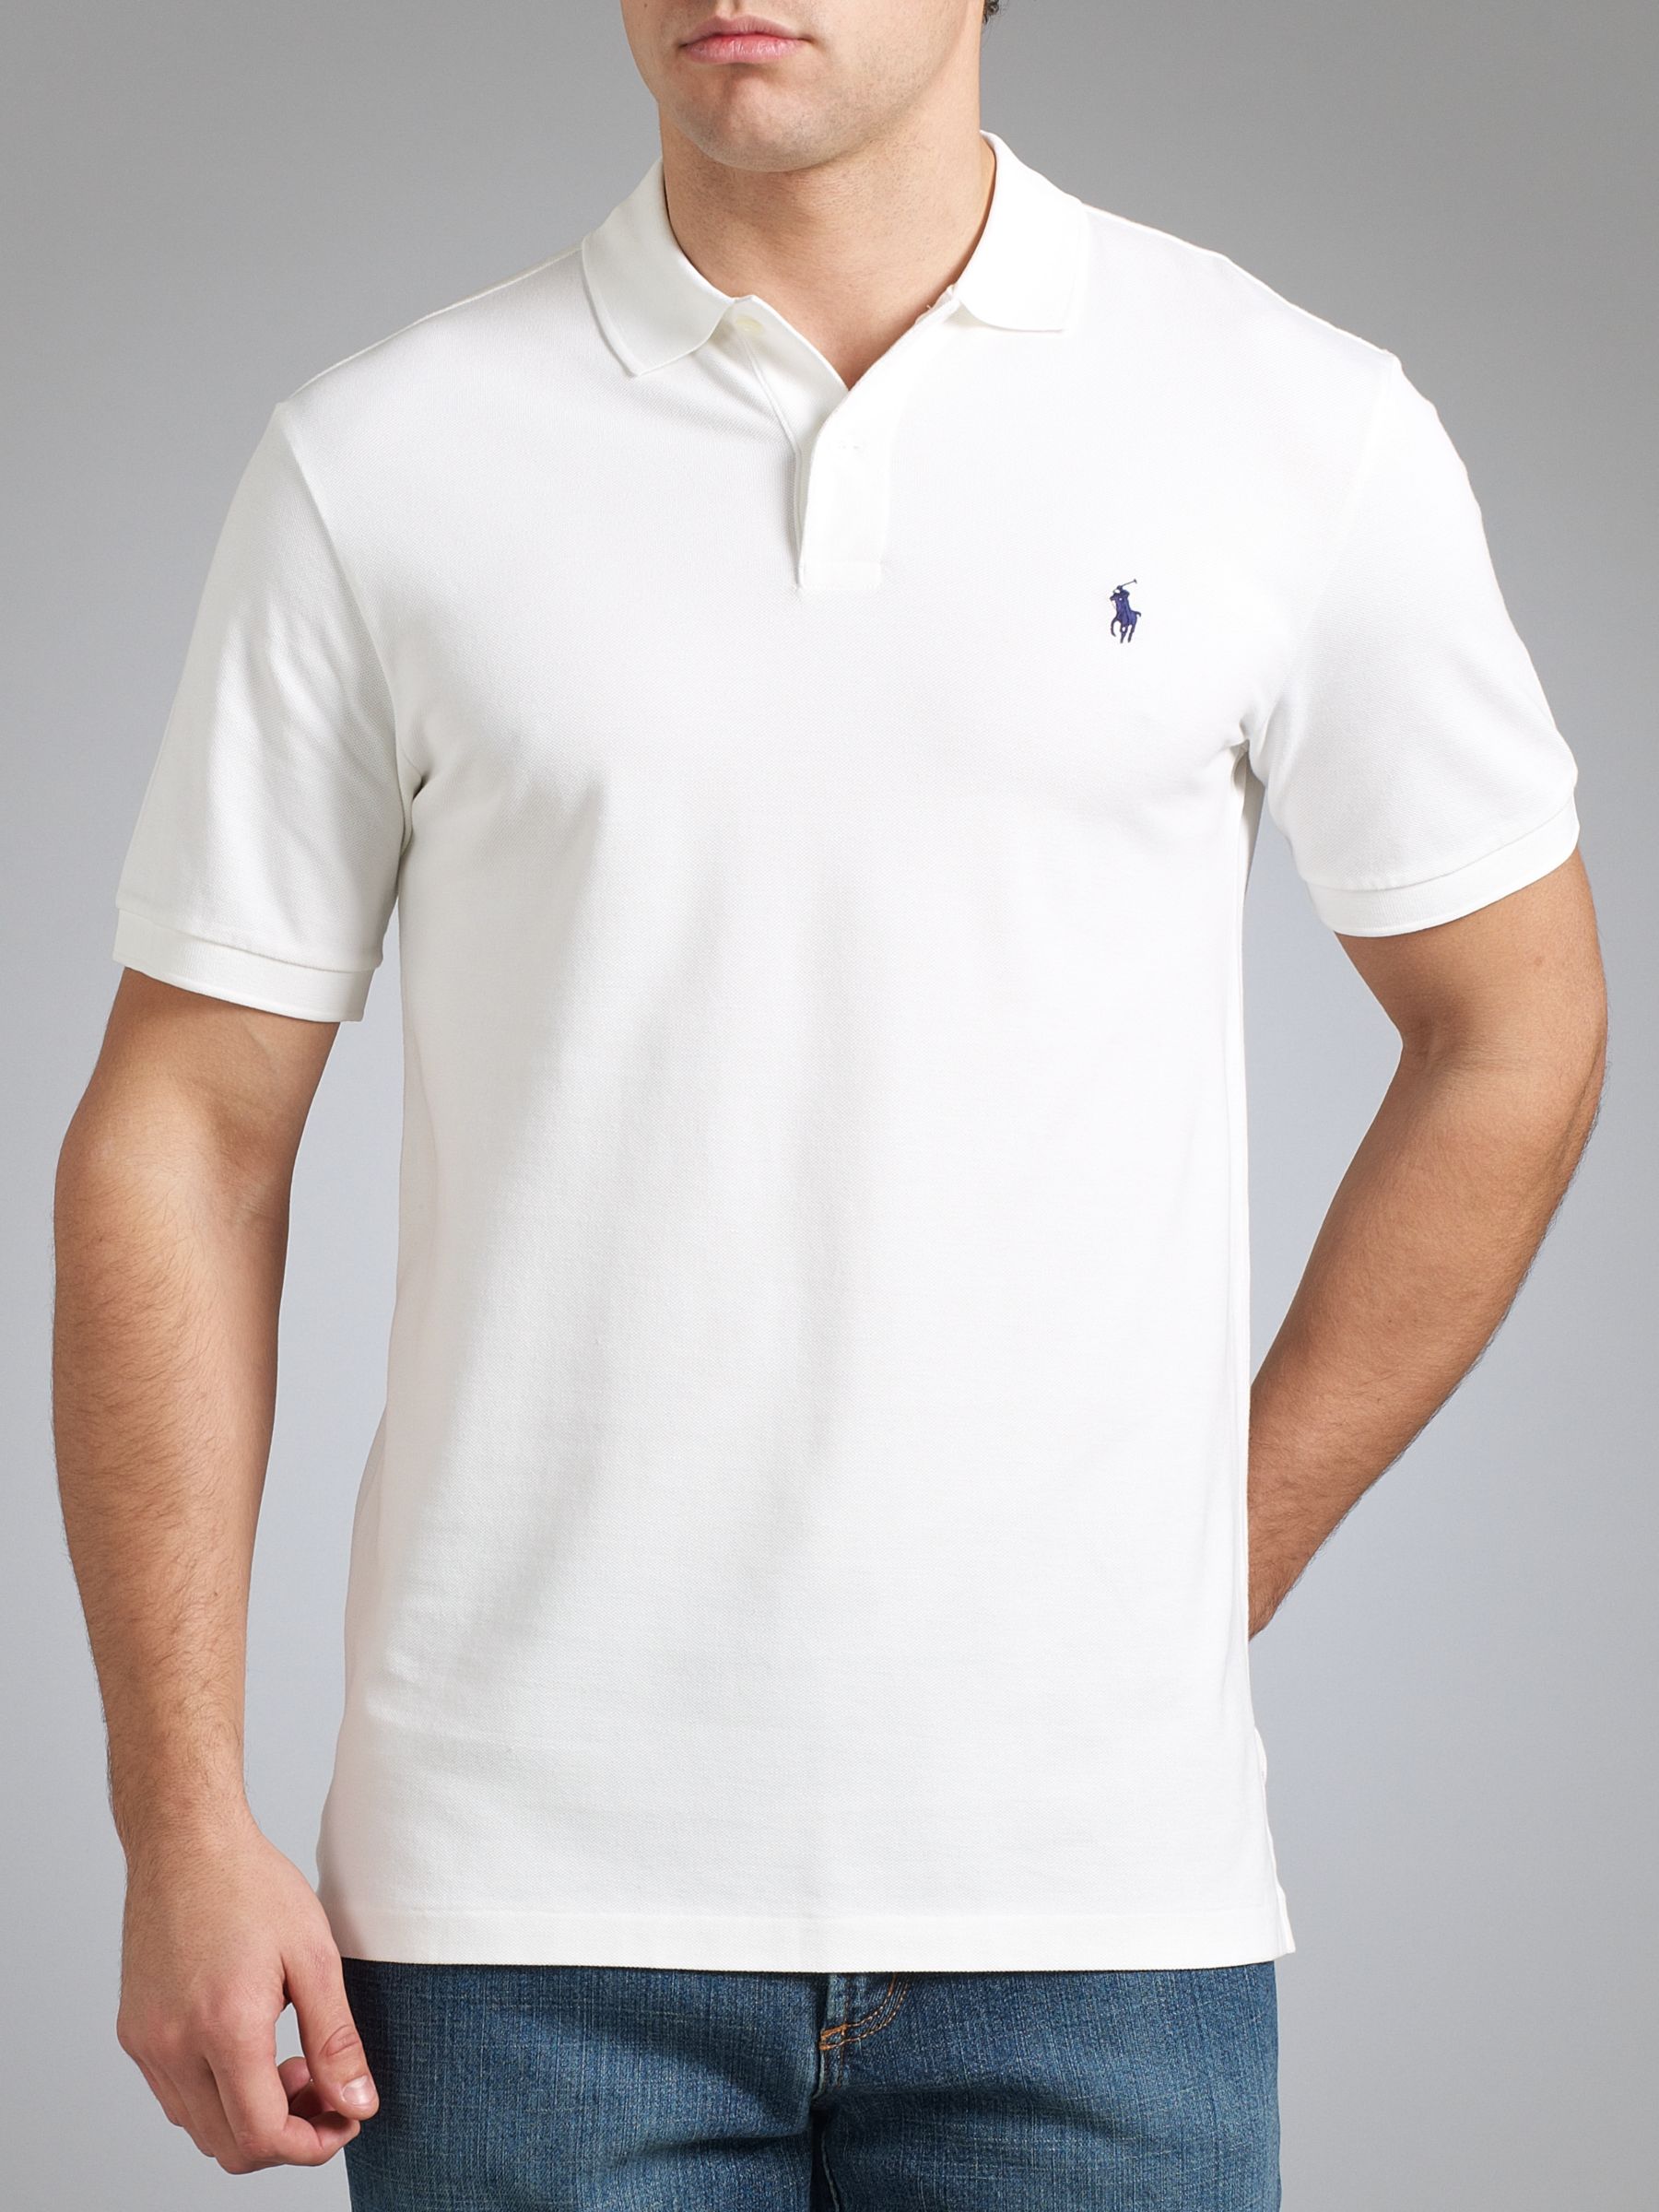 Ralph Lauren Pro-Fit Polo Shirt 